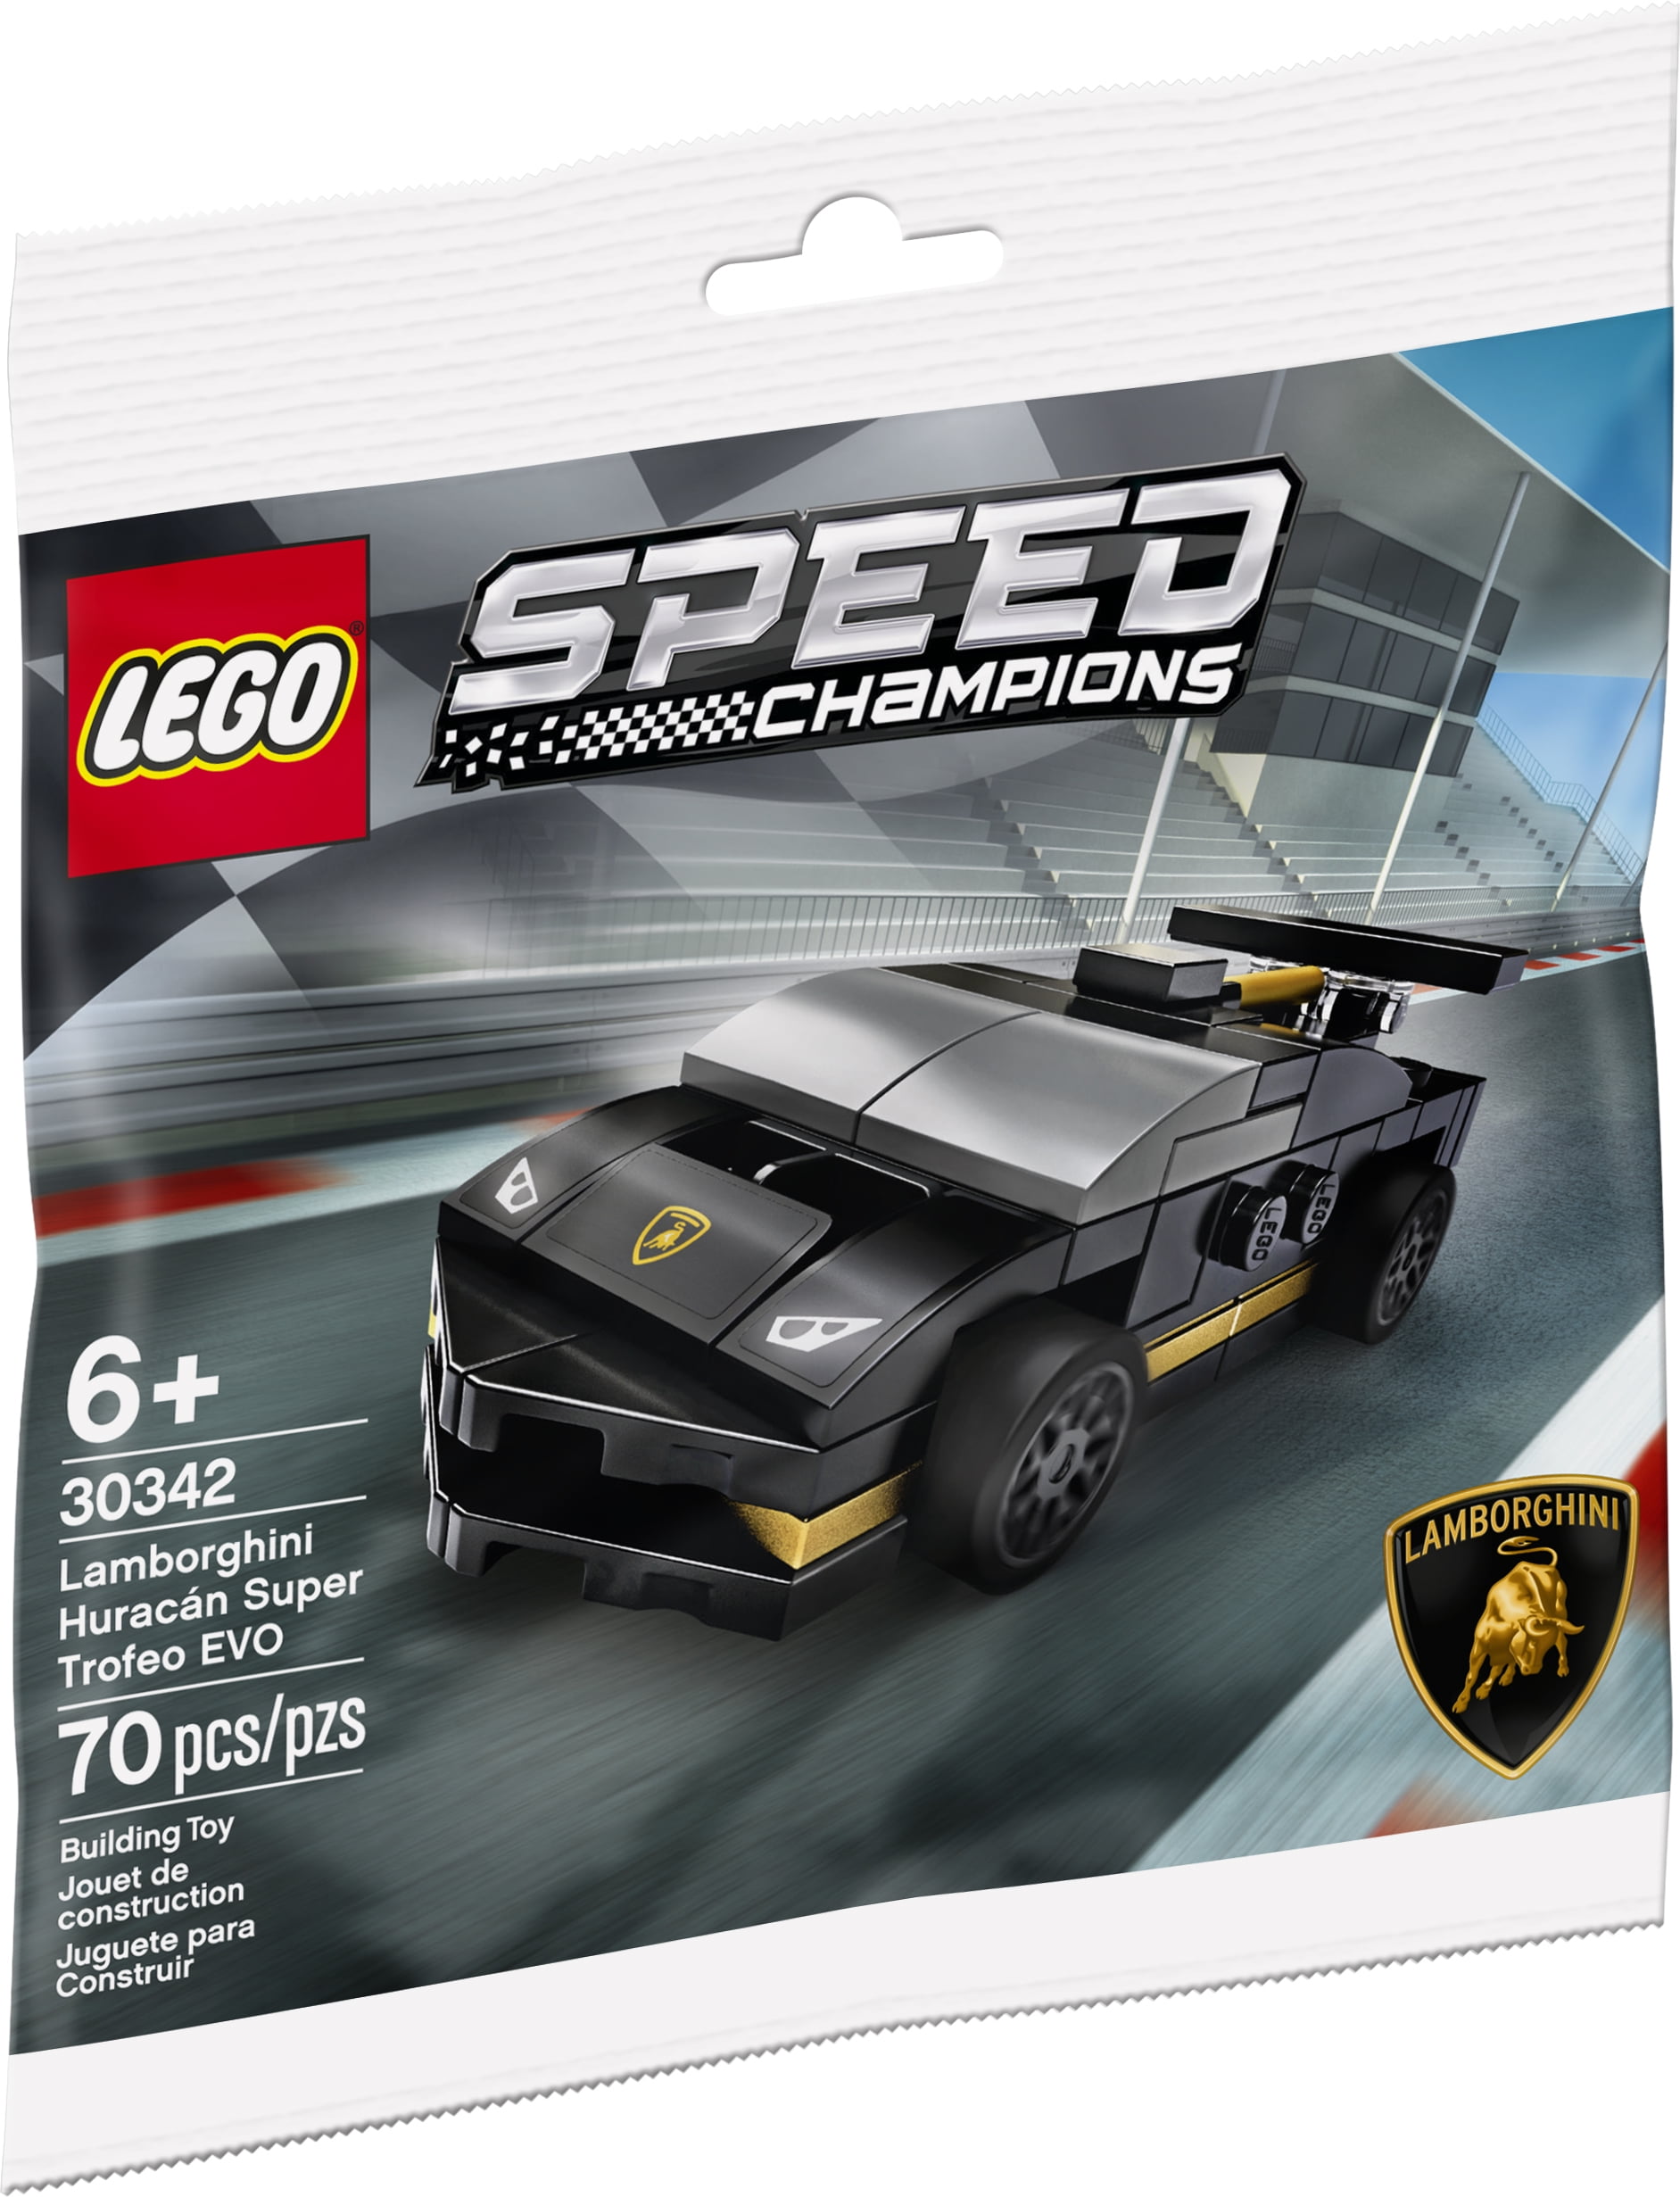 1 X Lego 30342 Speed Champions Lamborghini Huracán Super Trofeo EVO Scellé Nouveau